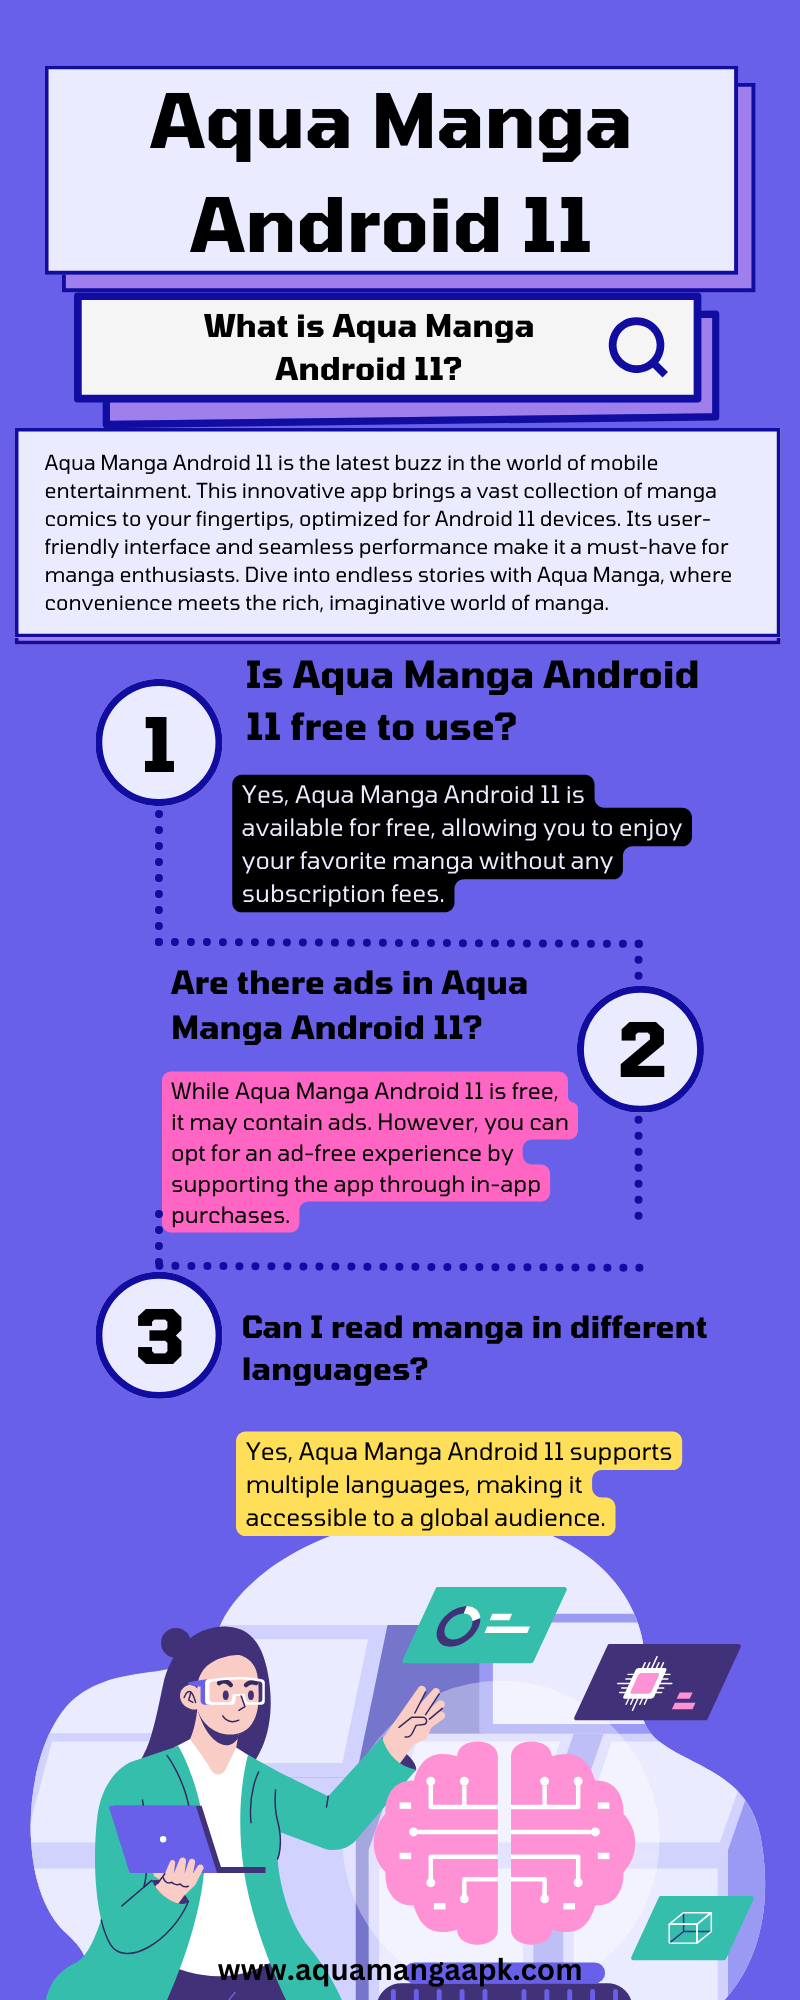 aqua manga apk android 11 infographic